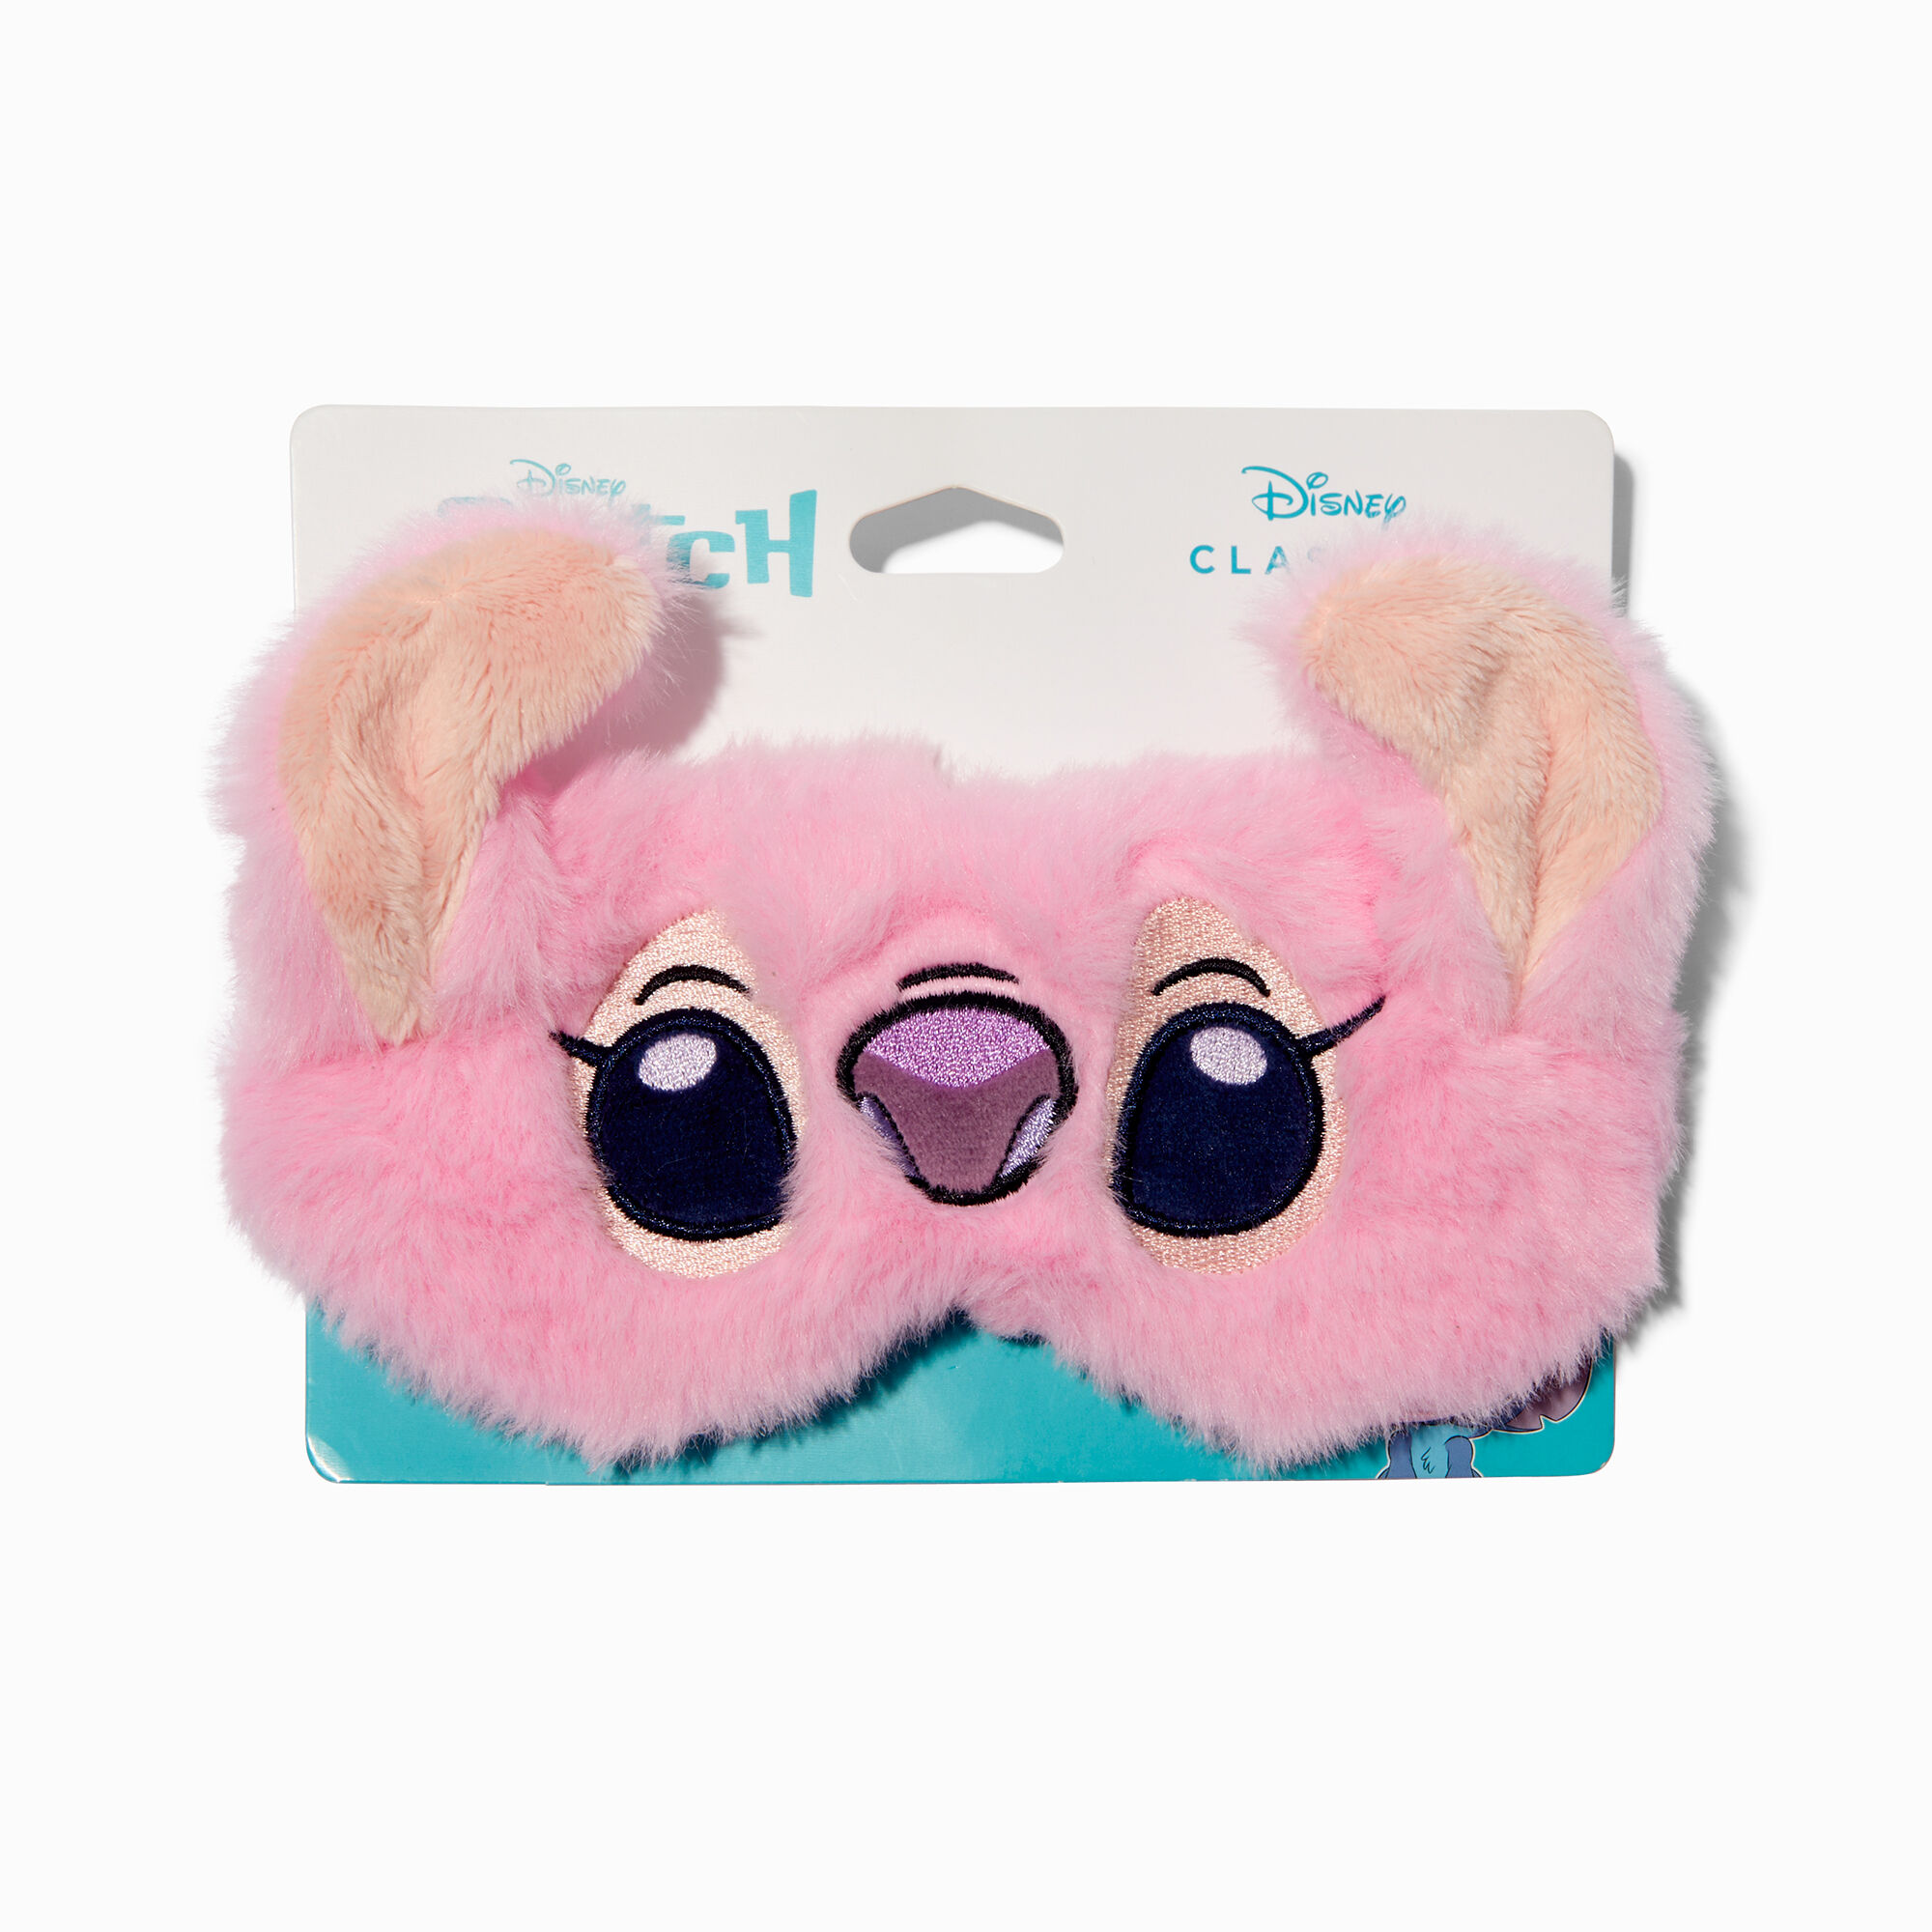 View Claires Disney Stitch Angel Sleepy Mask information